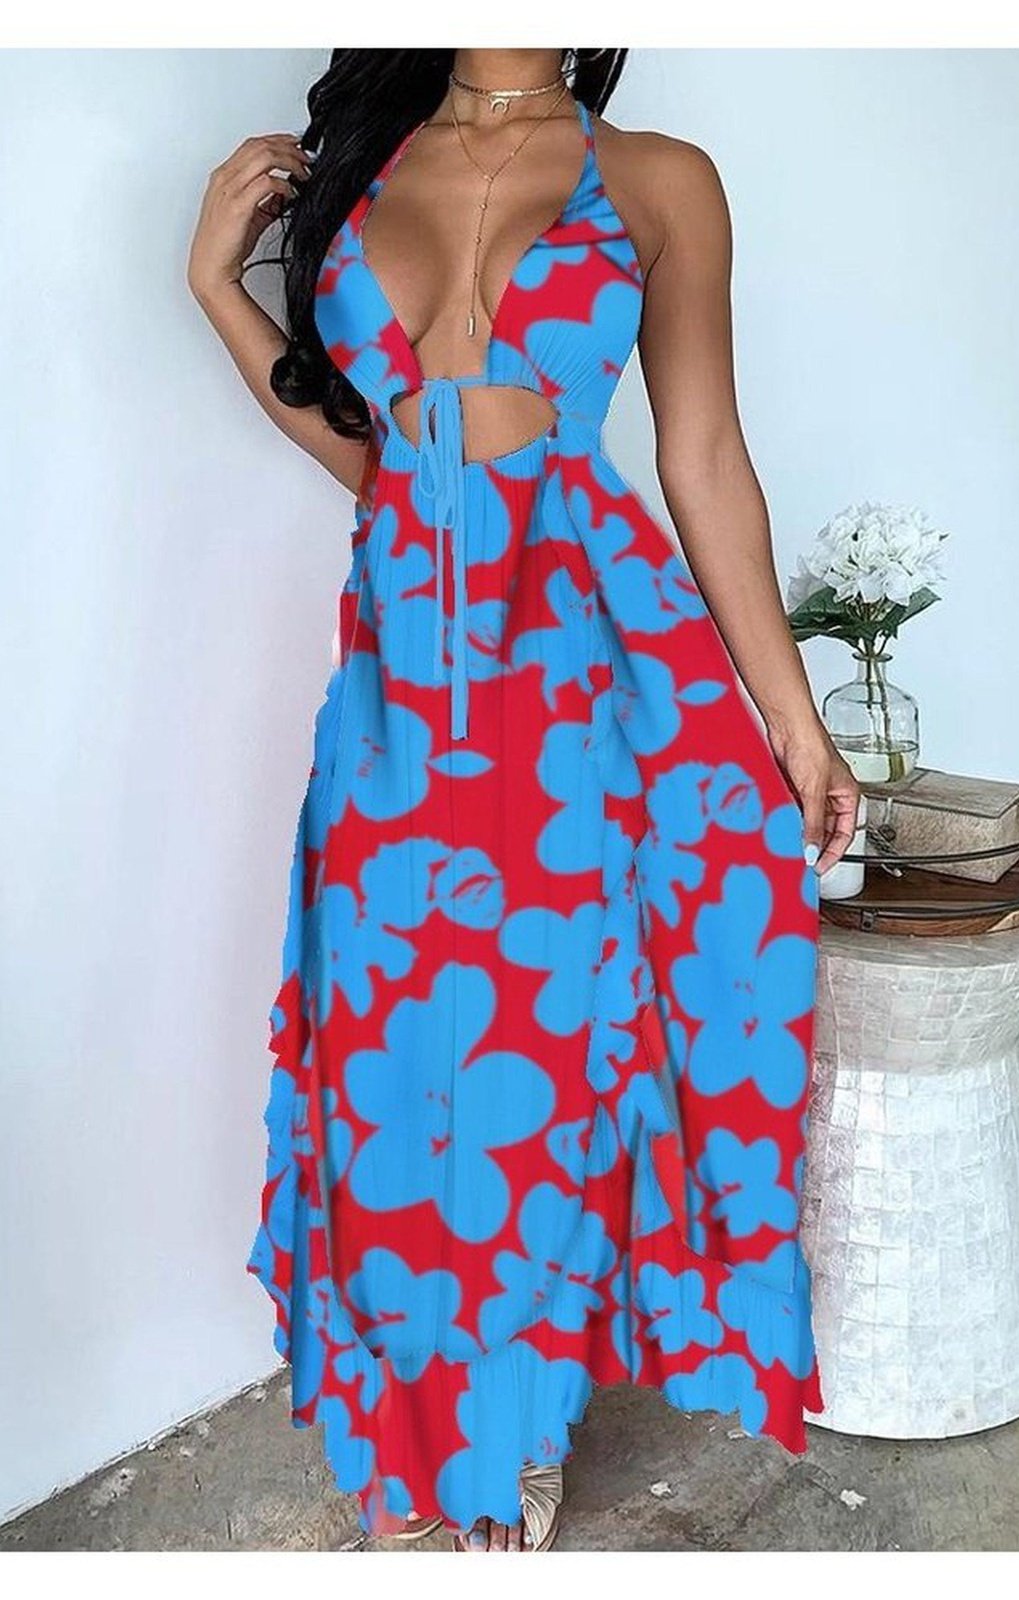 Floral Print Halter Sleeveless Lace Up Cutout Maxi Dress